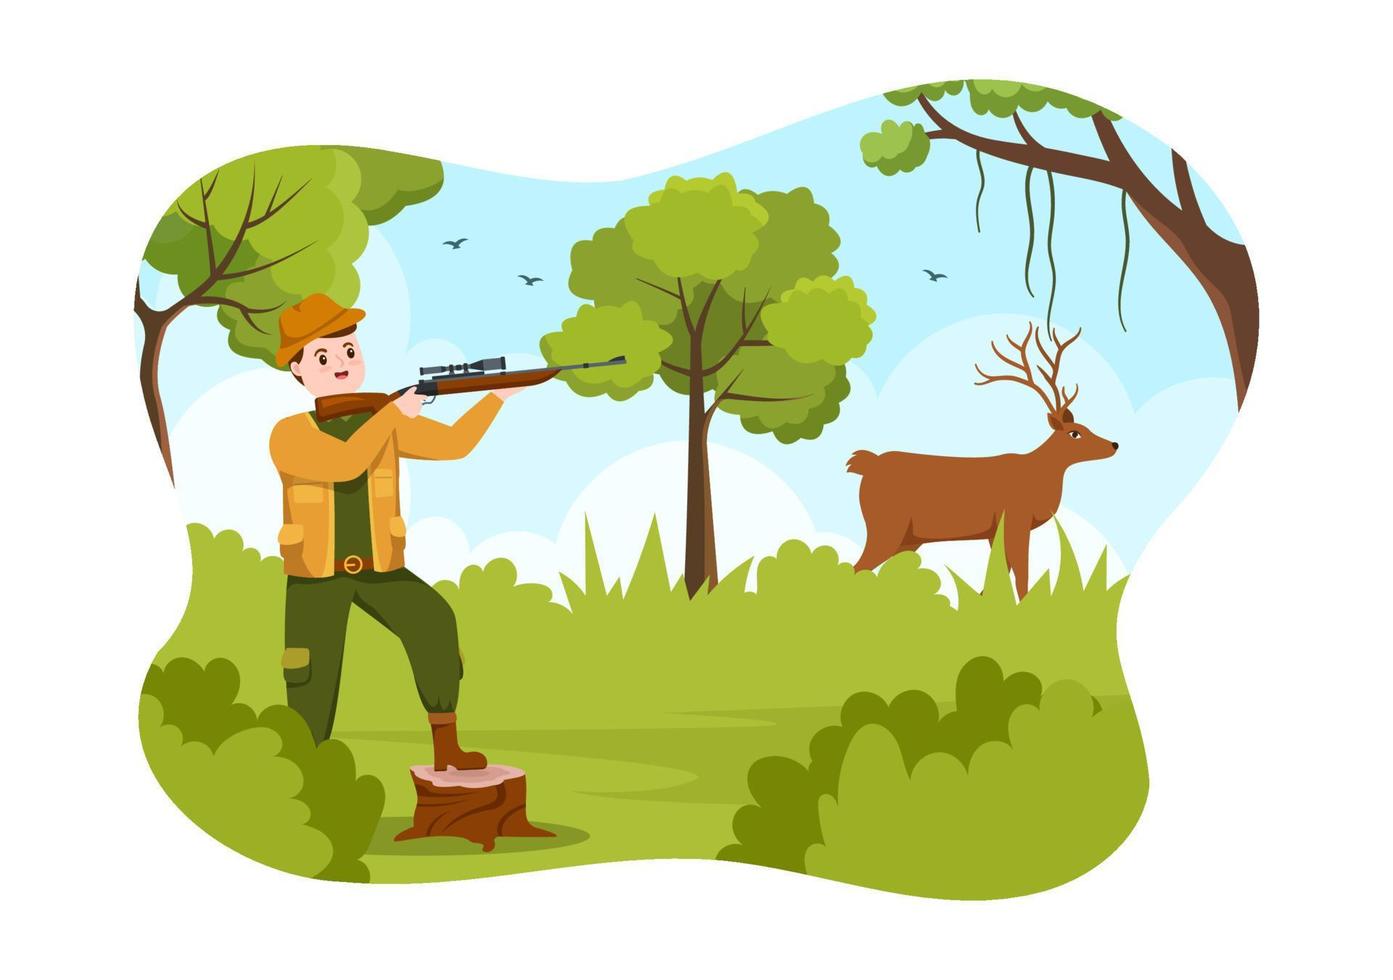 cazador con rifle de caza o arma disparando a aves o animales en el bosque en dibujos animados planos ilustración de plantilla de dibujo a mano vector